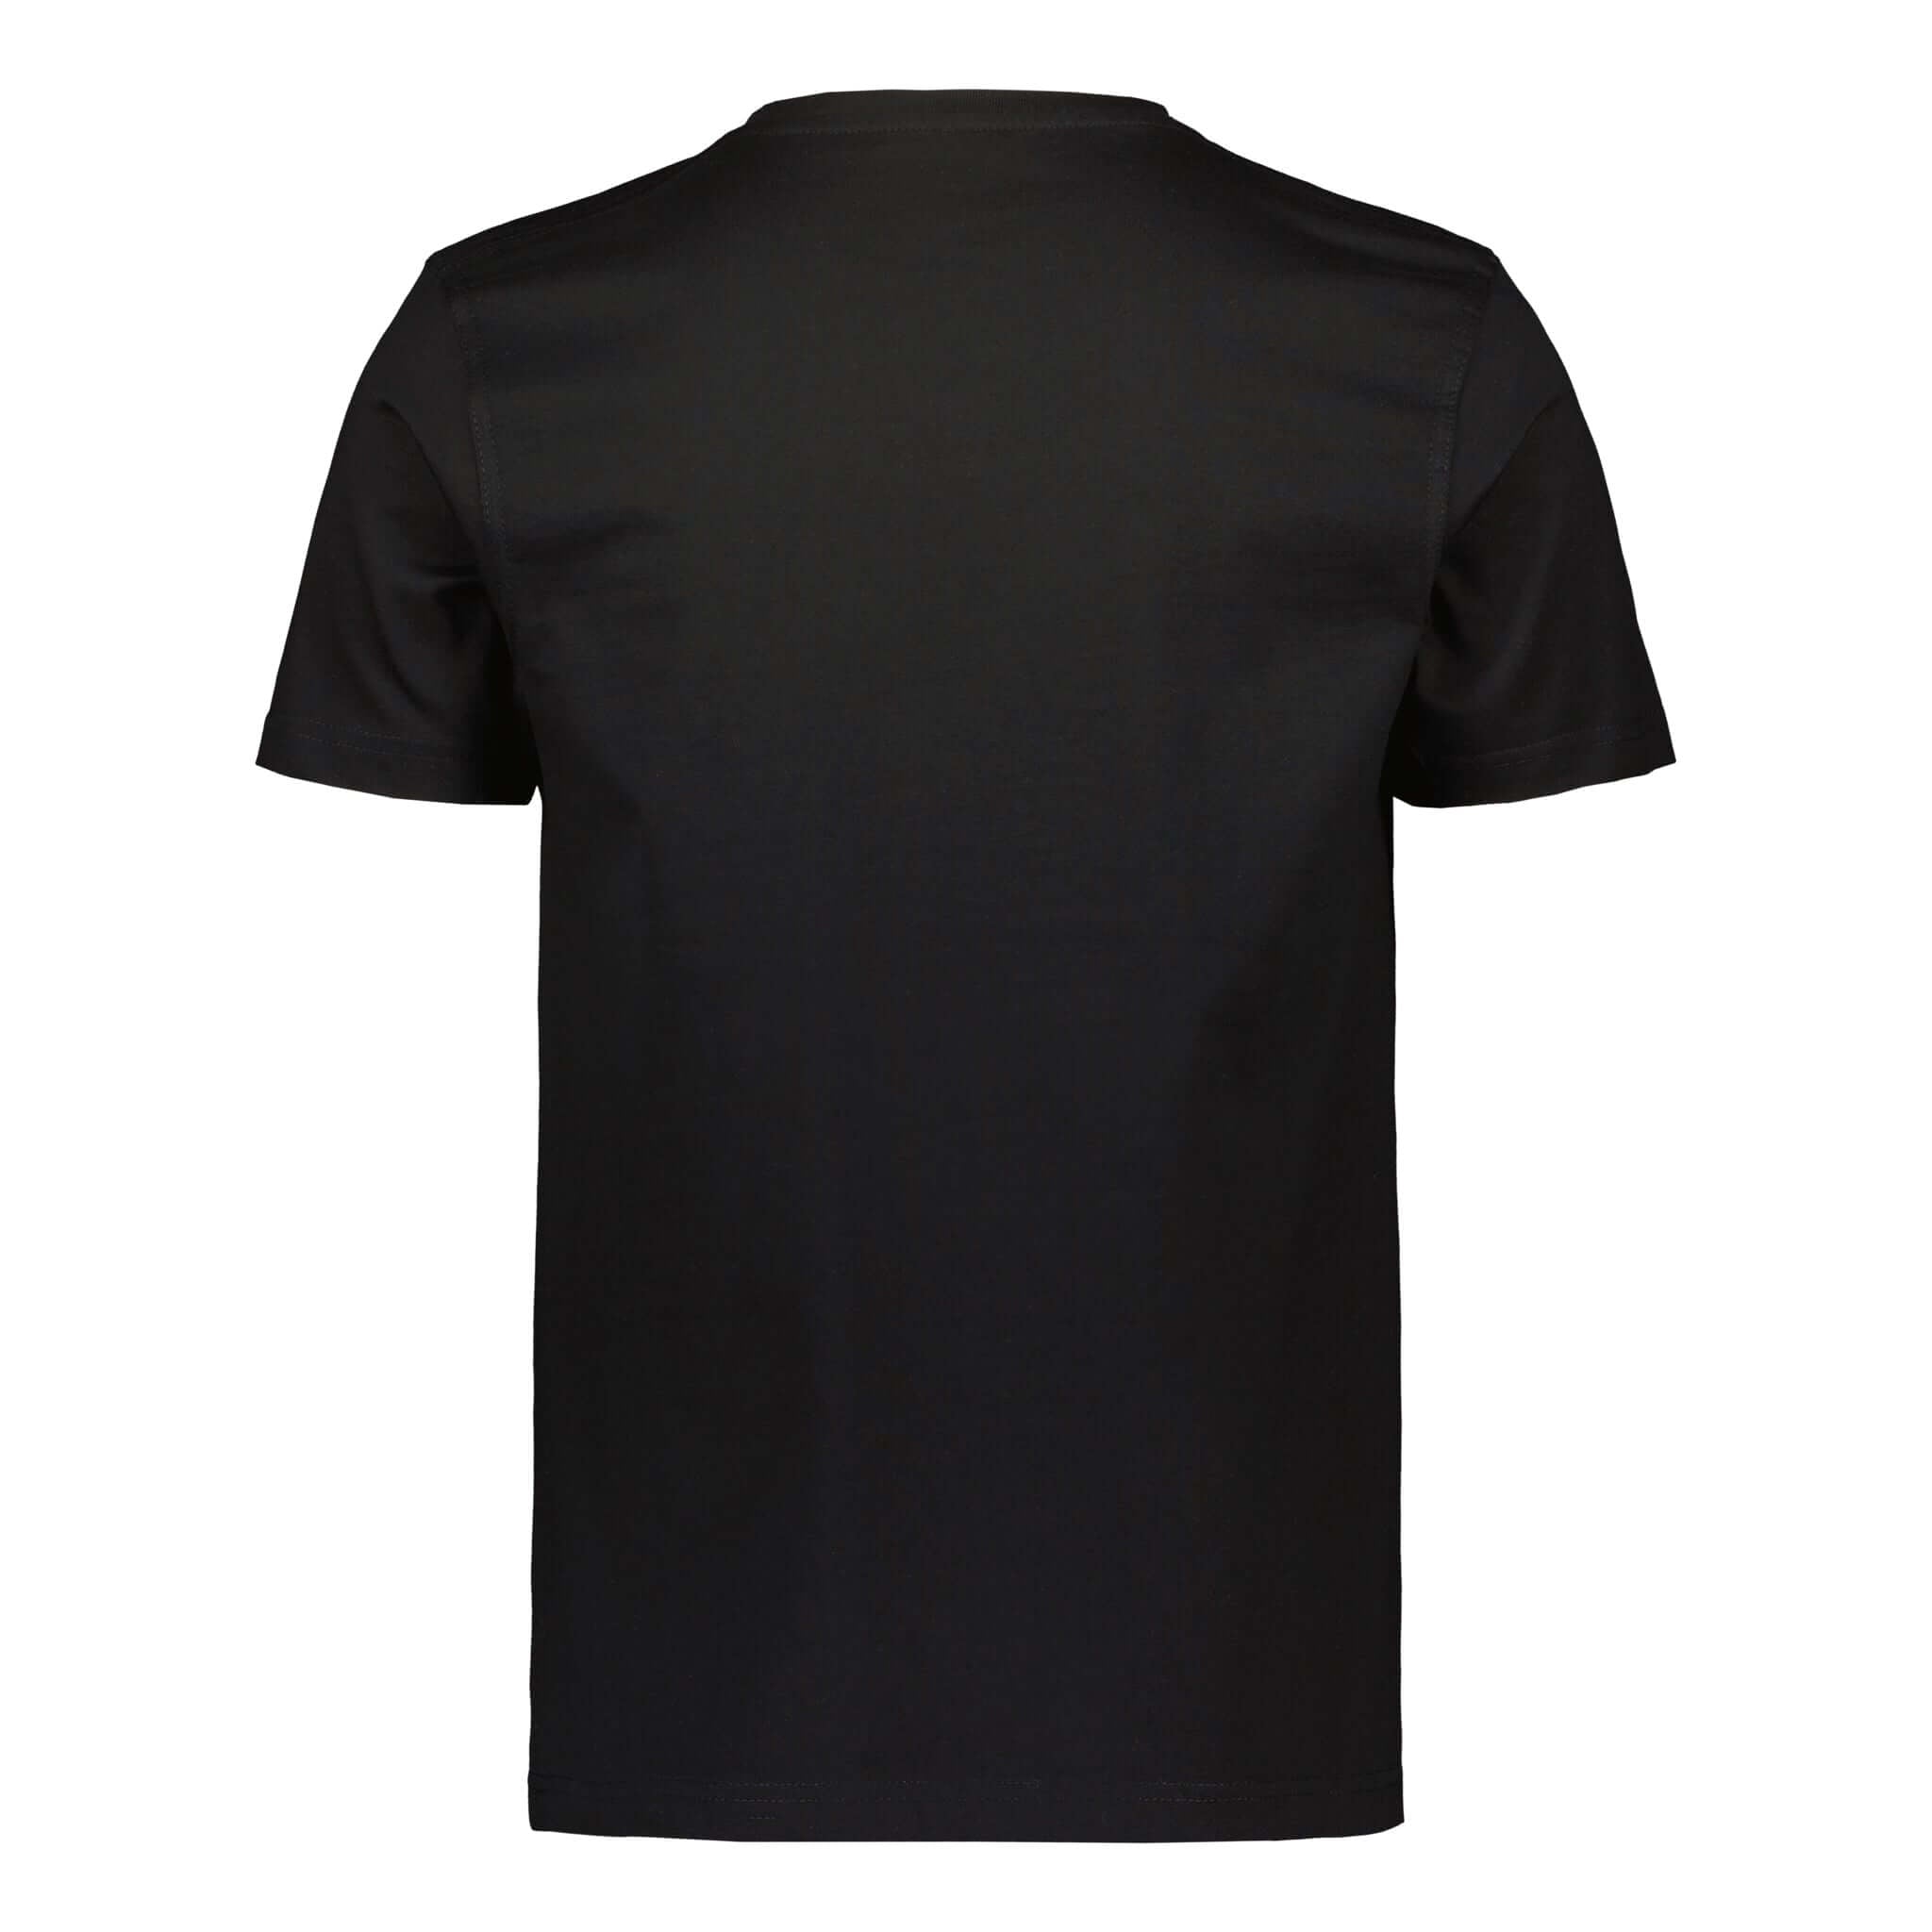 ENCE Basic T-Shirt Black - ENCE Shop